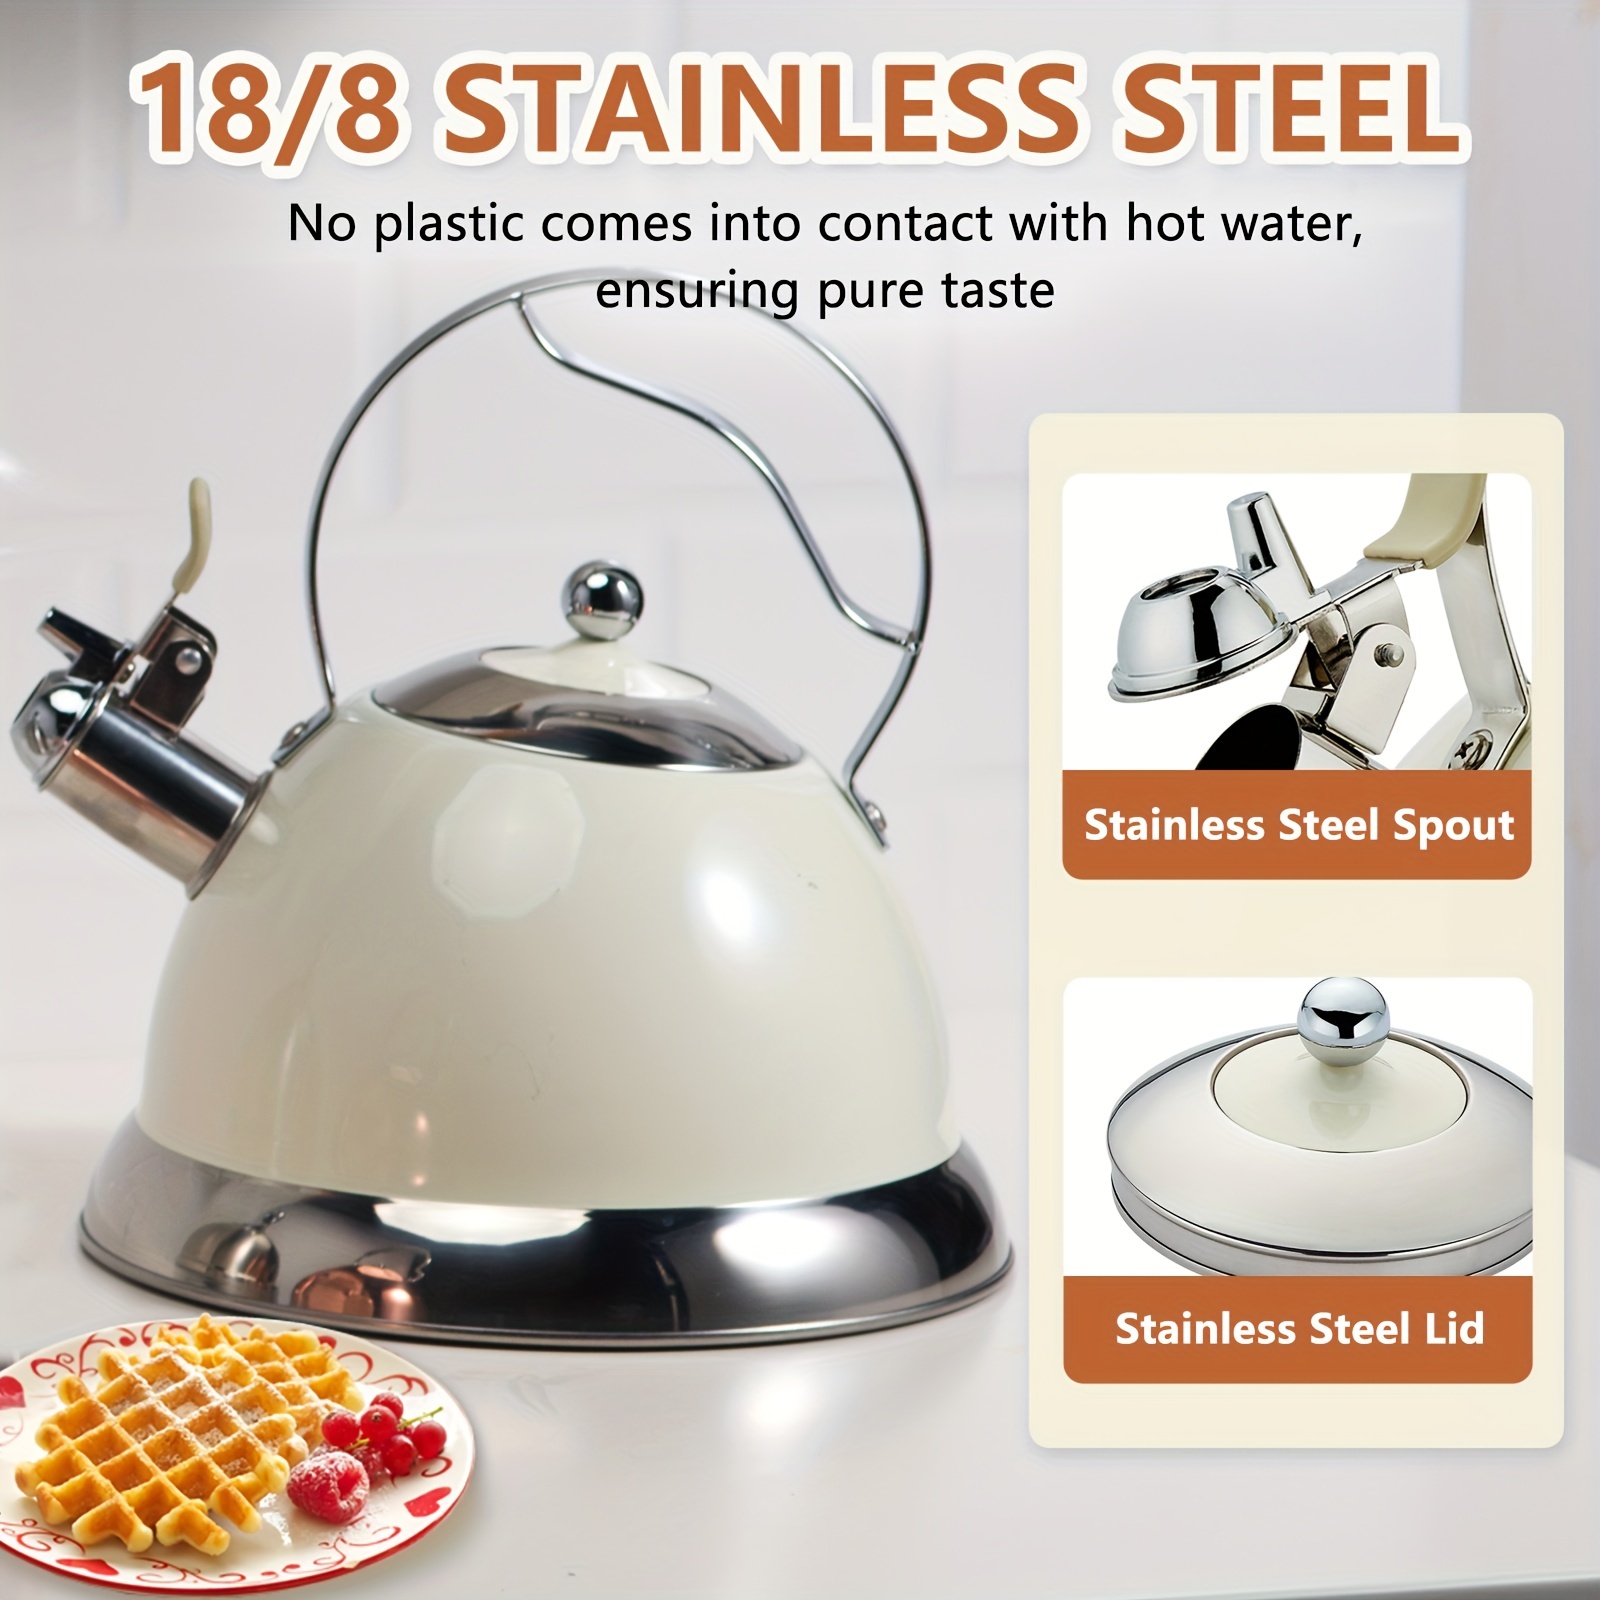 KitchenAid 5153164 Stainless Steel Whistling Tea Kettle, 2.3 Qt – Toolbox  Supply